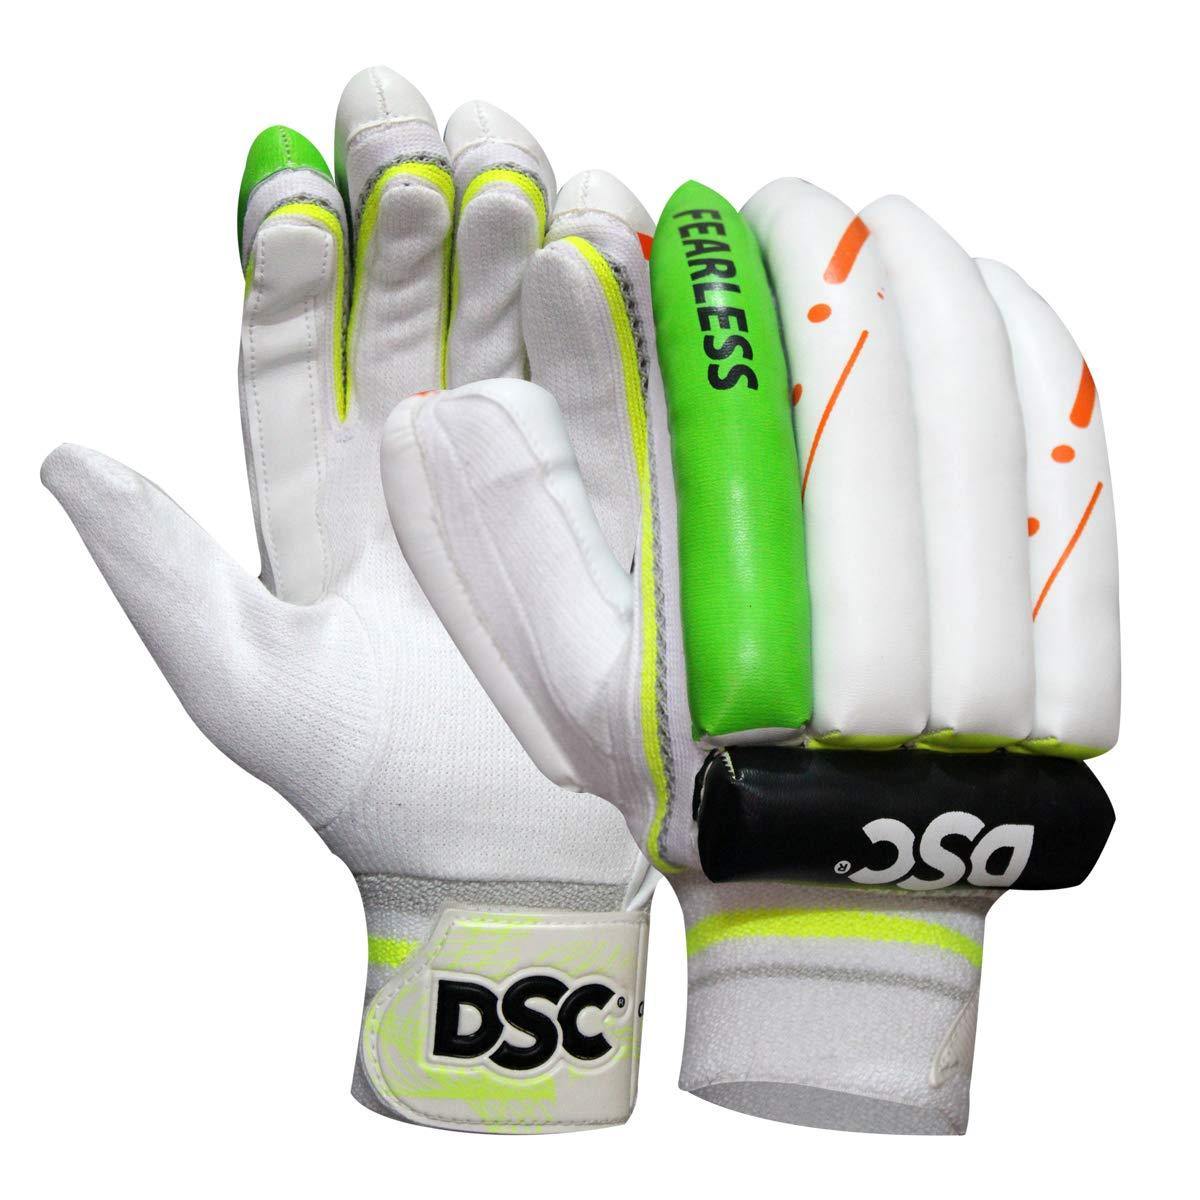 DSC Condor Ruffle Leather Cricket Batting Gloves (Left Hand) - Best Price online Prokicksports.com